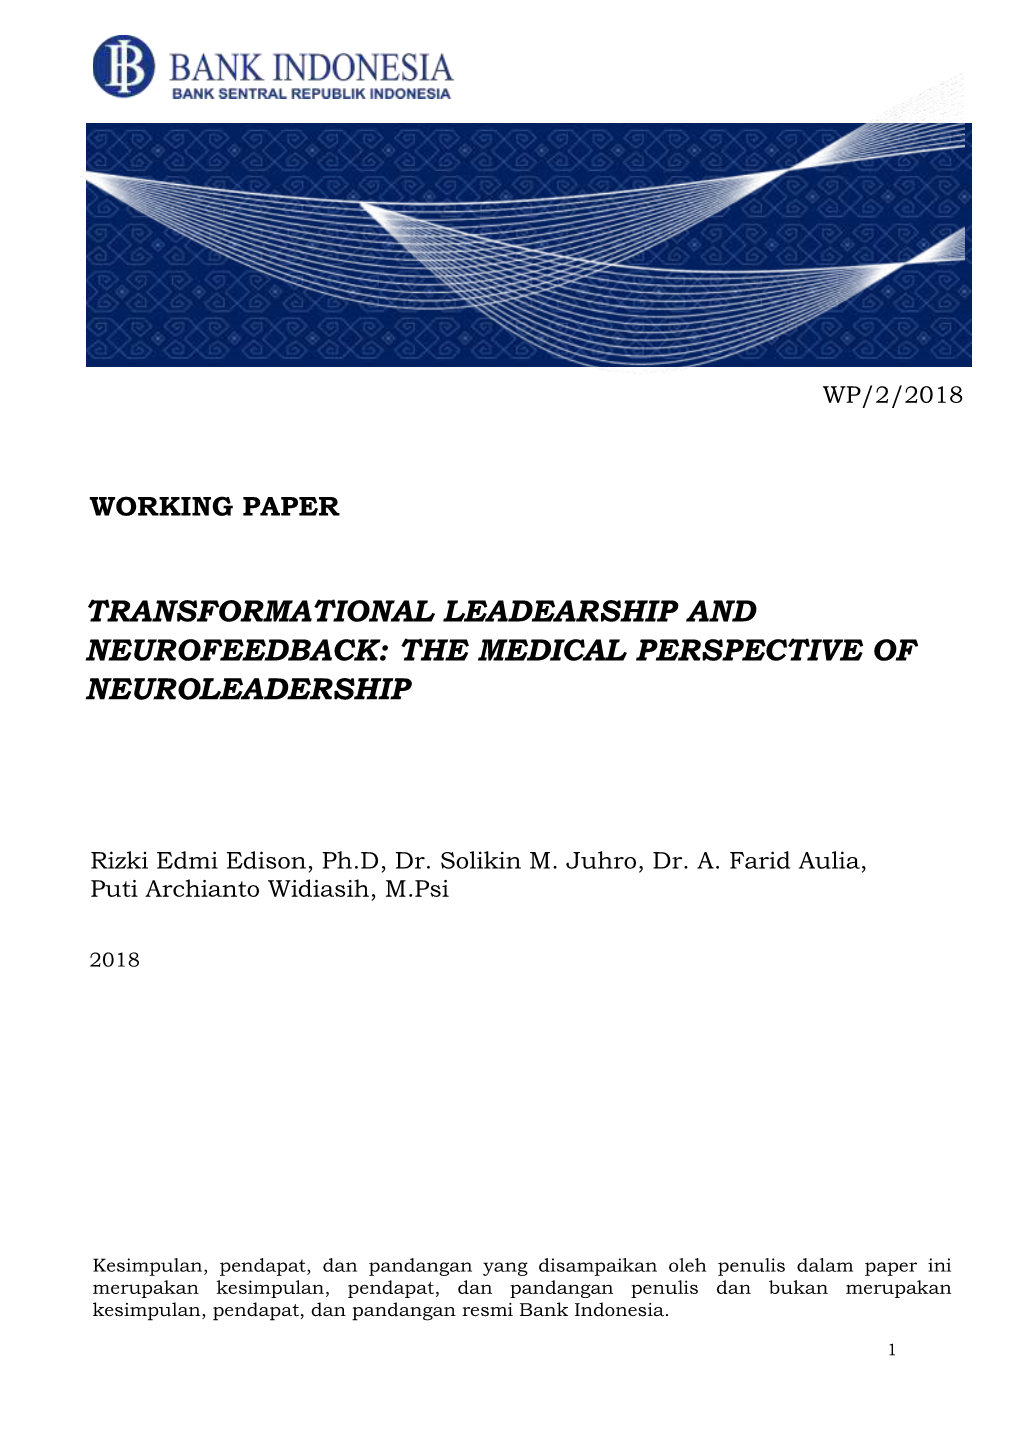 Transformational Leadearship and Neurofeedback: the Medical Perspective of Neuroleadership1